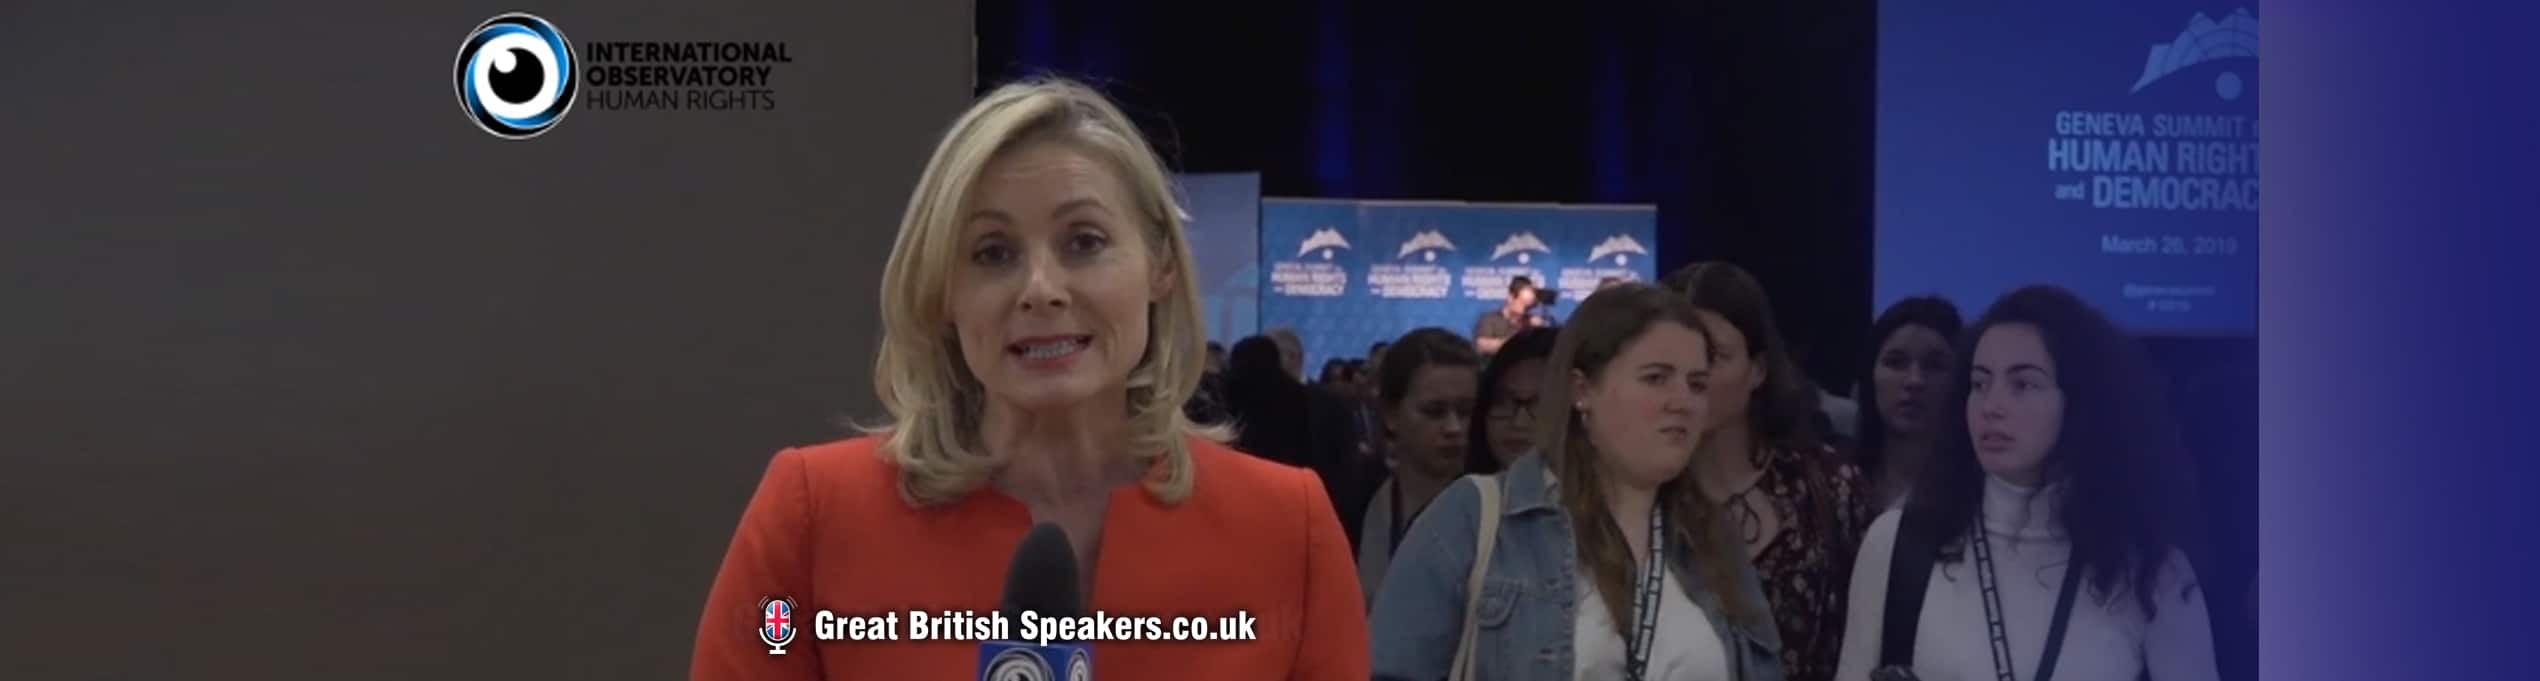 Trish Lynch event host UN moderator facilitator at Great British Speakers